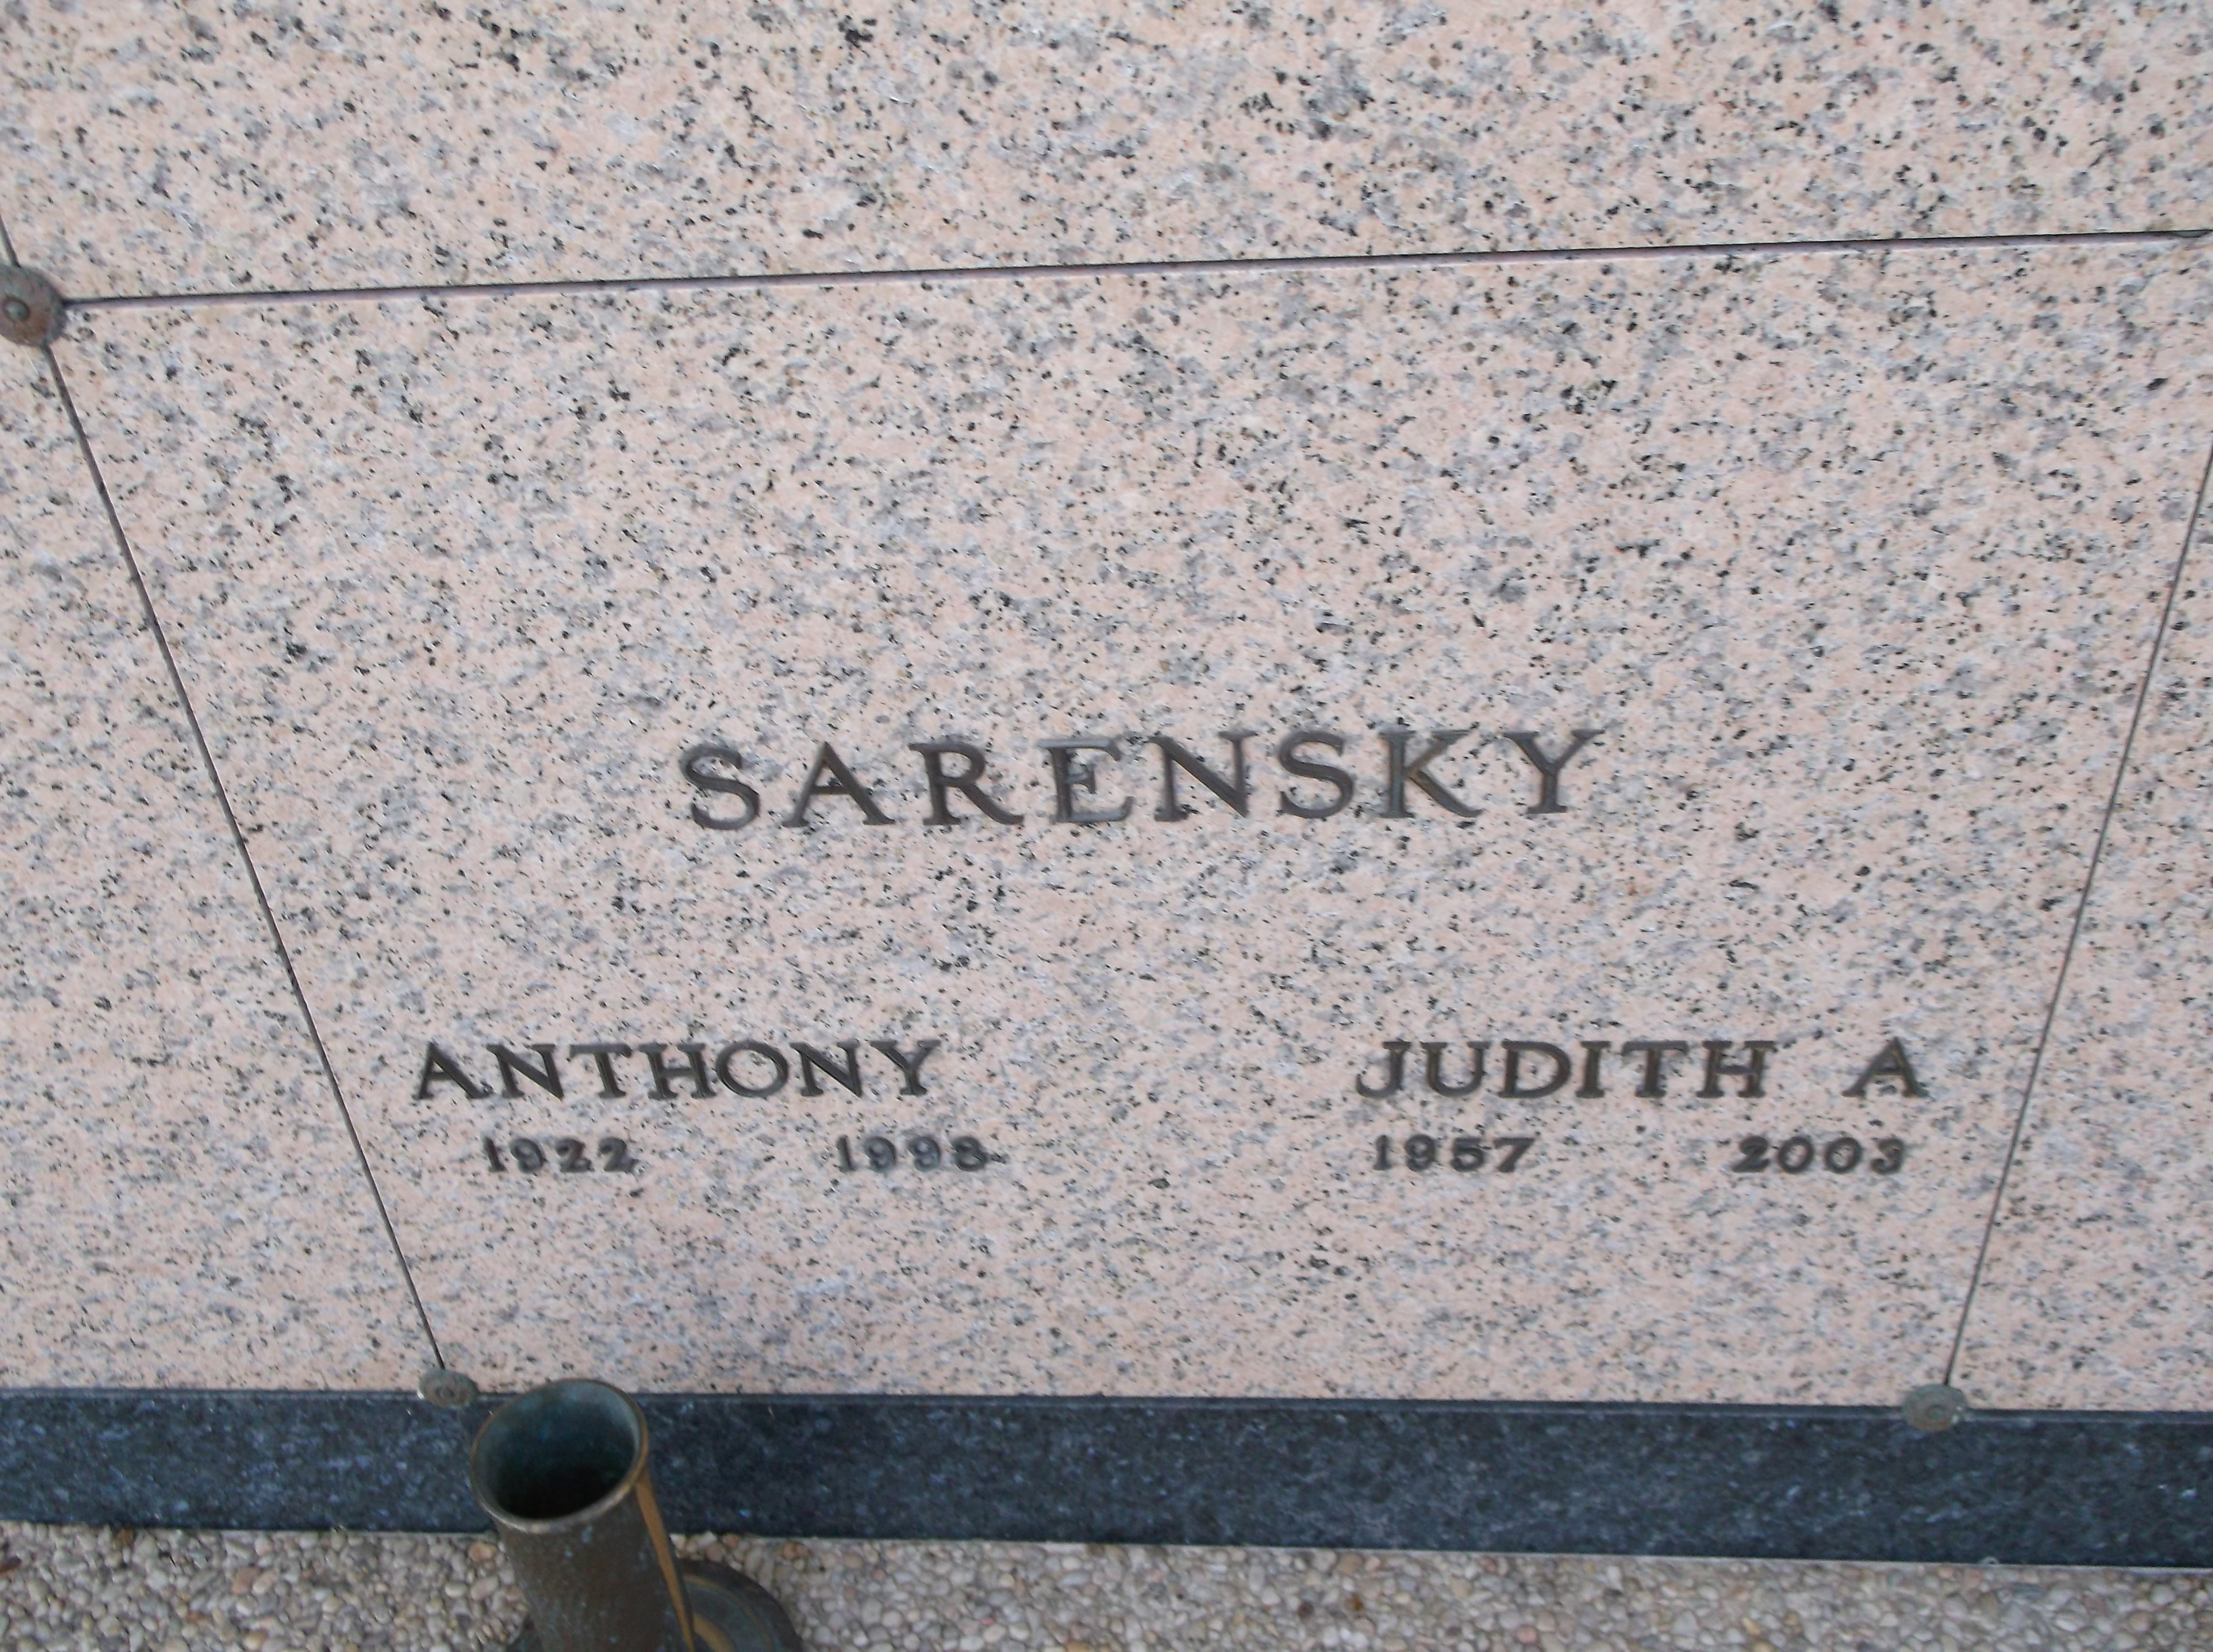 Anthony Sarensky